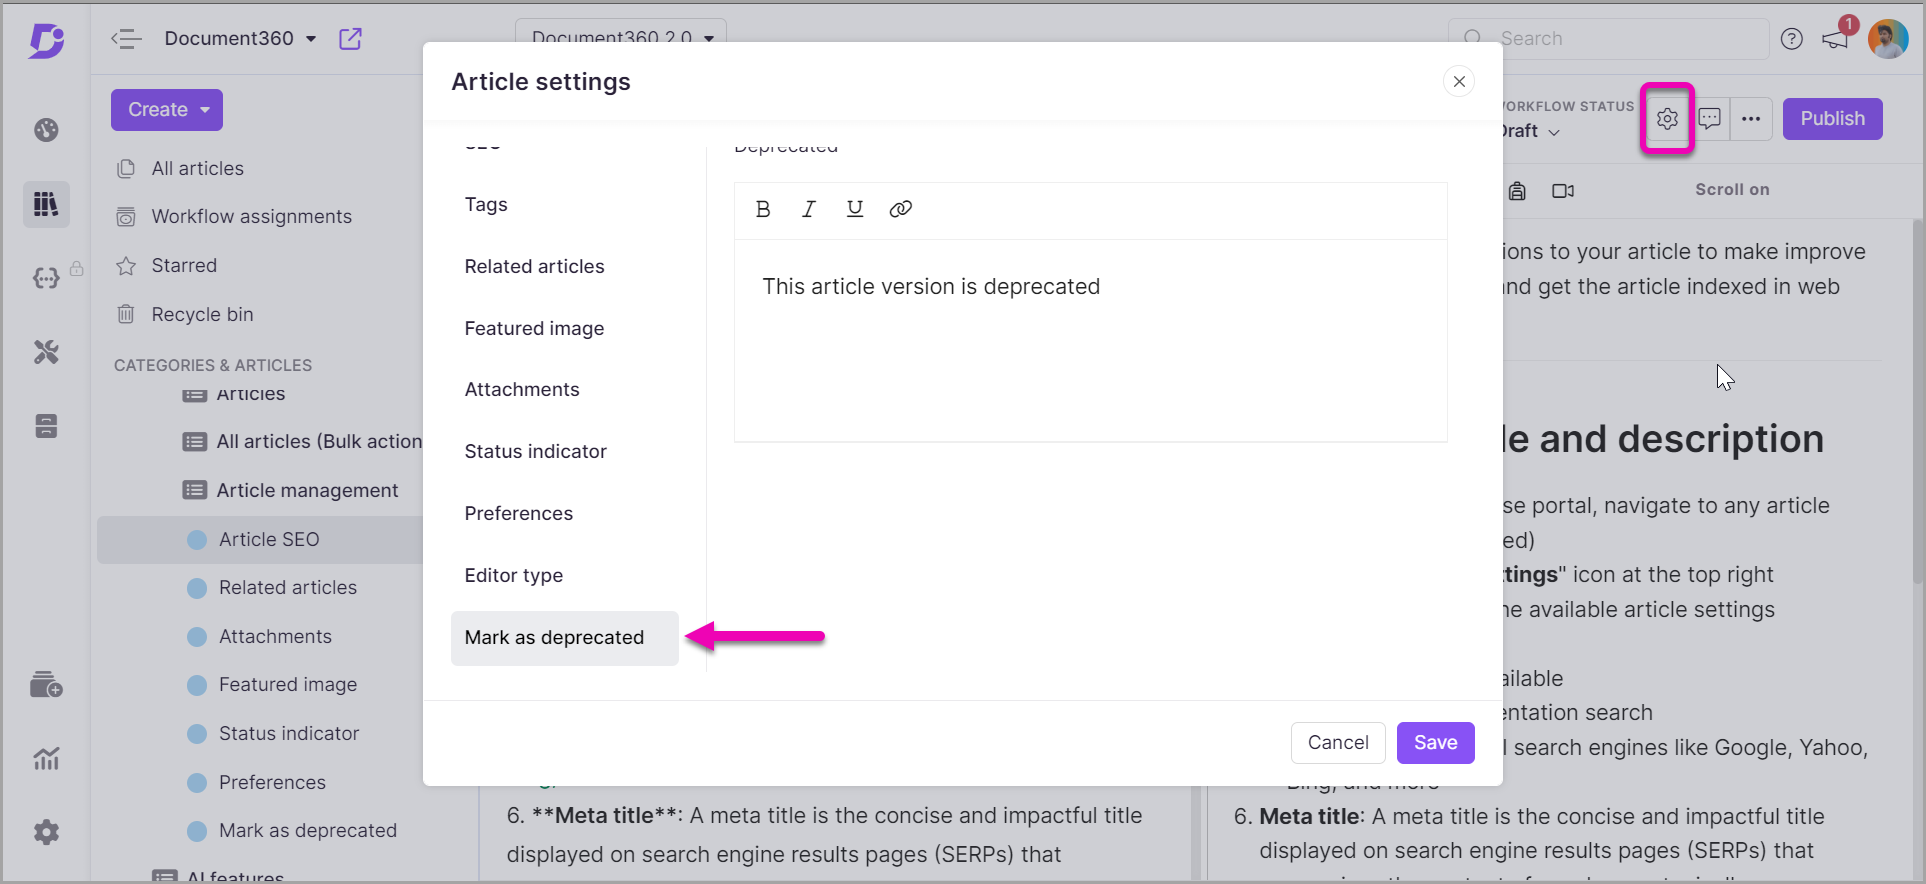 11-Screenshot-Article_settings_Mark_as_deprecated_portal_view